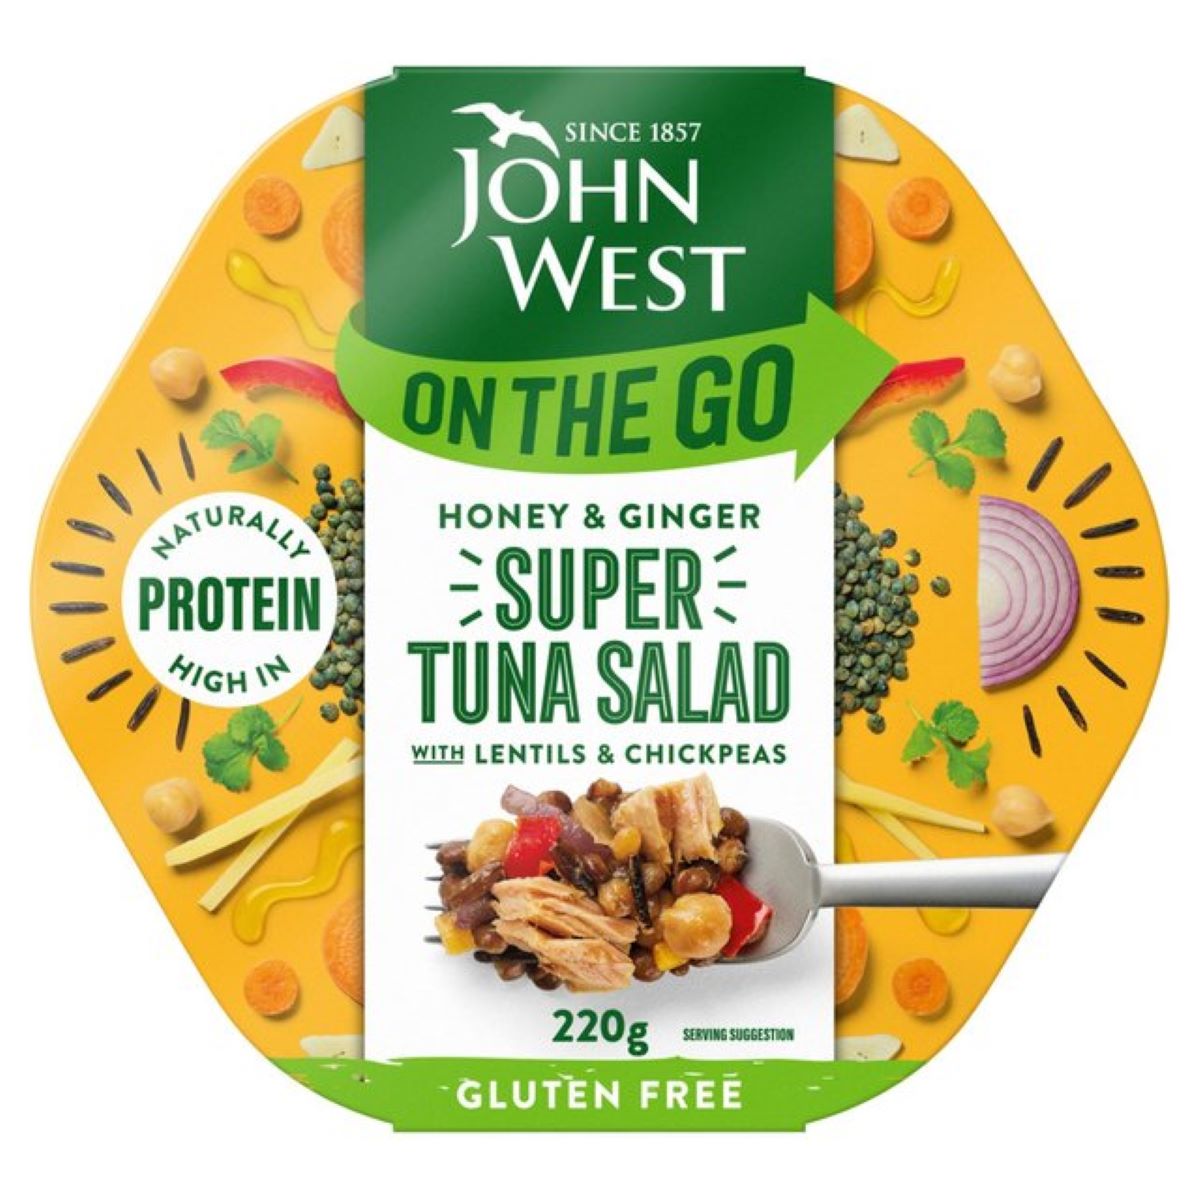 John West On The Go Honey & Ginger Super Tuna Salad Gluten Free 220g